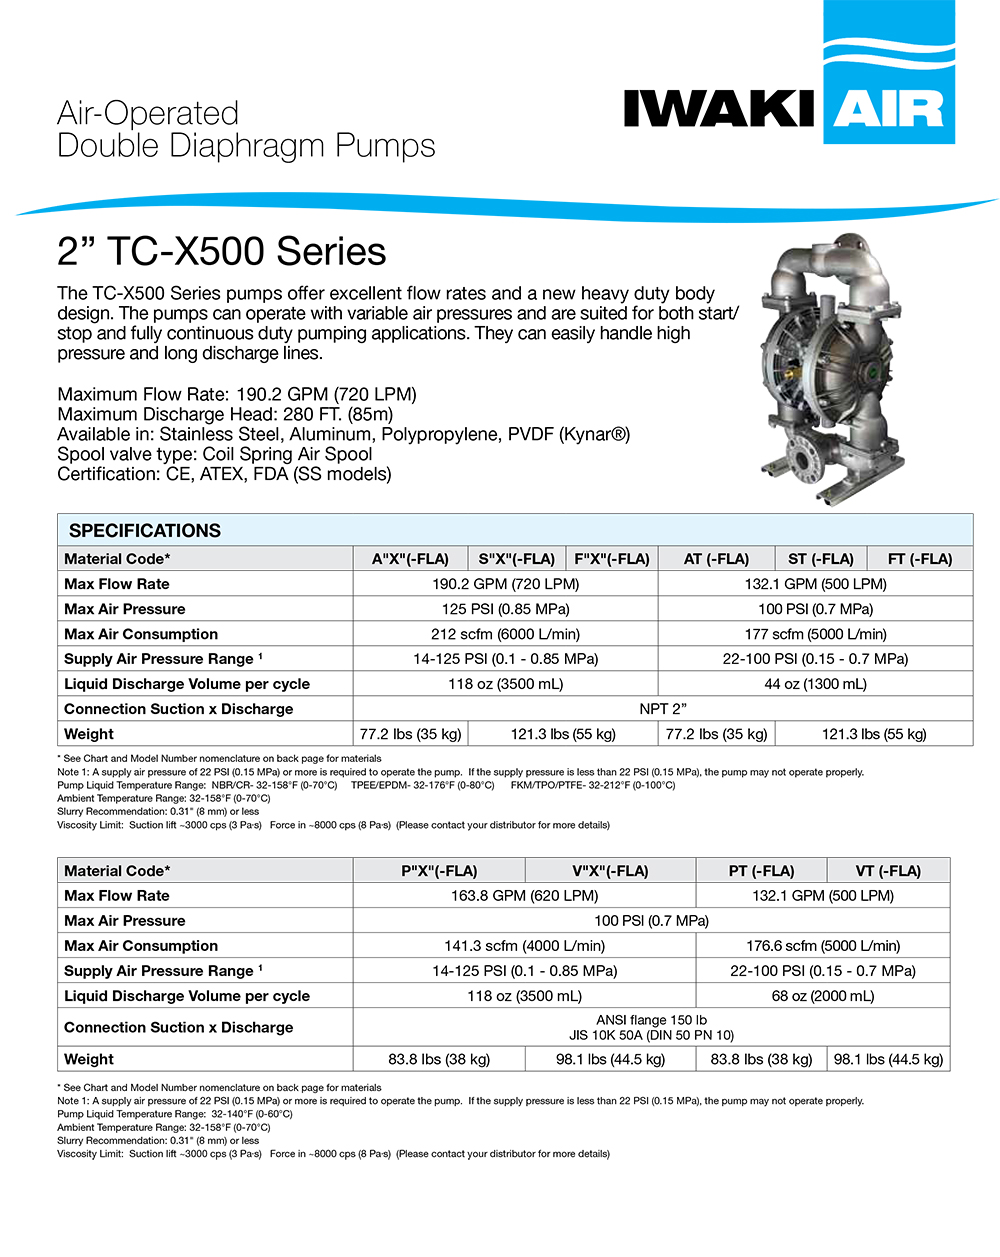 TC-X500 Series Pumps Data Sheet